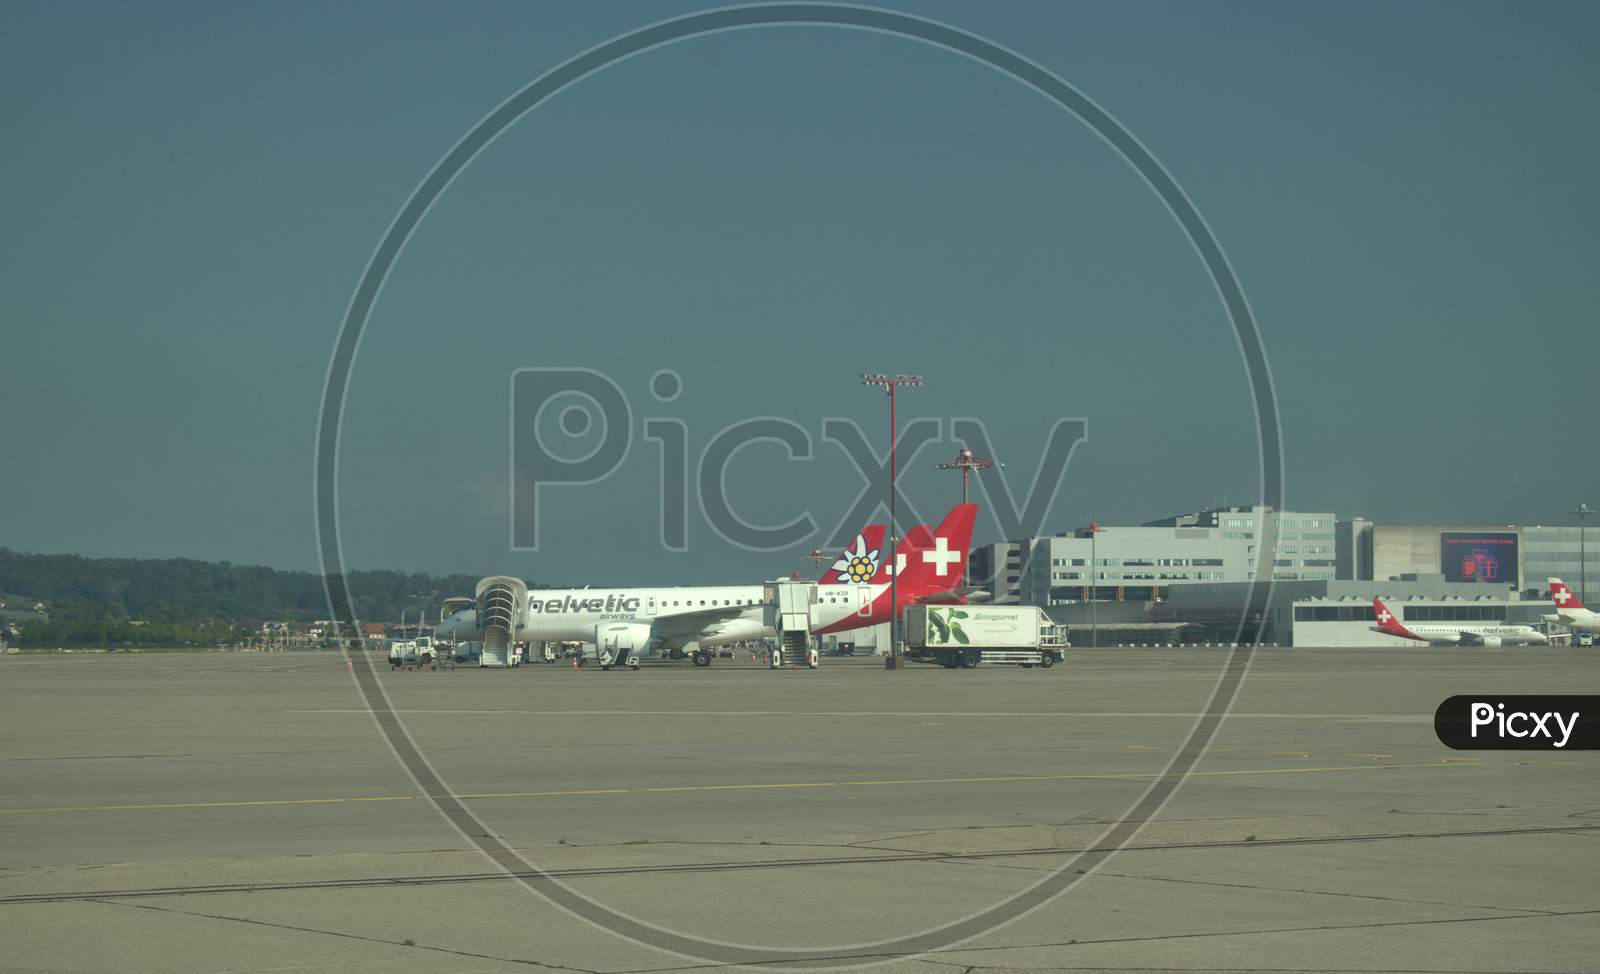 Helvetic airways Embraer E190 is parking at the Zurich international airport in Switzerland 17.9.2020